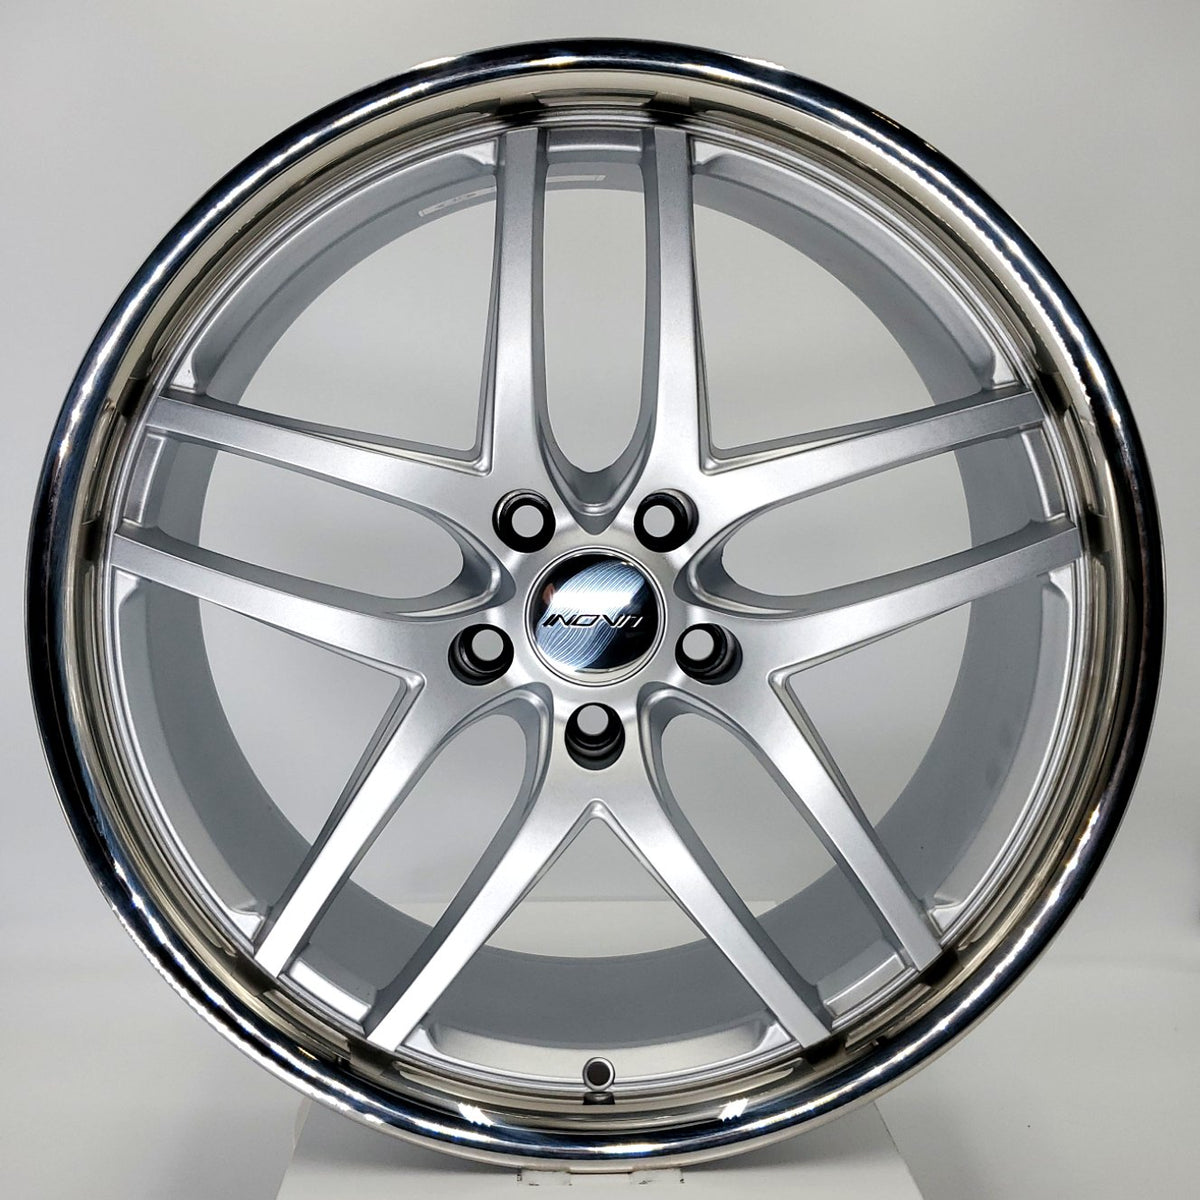 INOVIT® YSM-012 SONIC Wheels - Hyper Silver Rims - 01219M5B33S1BNA